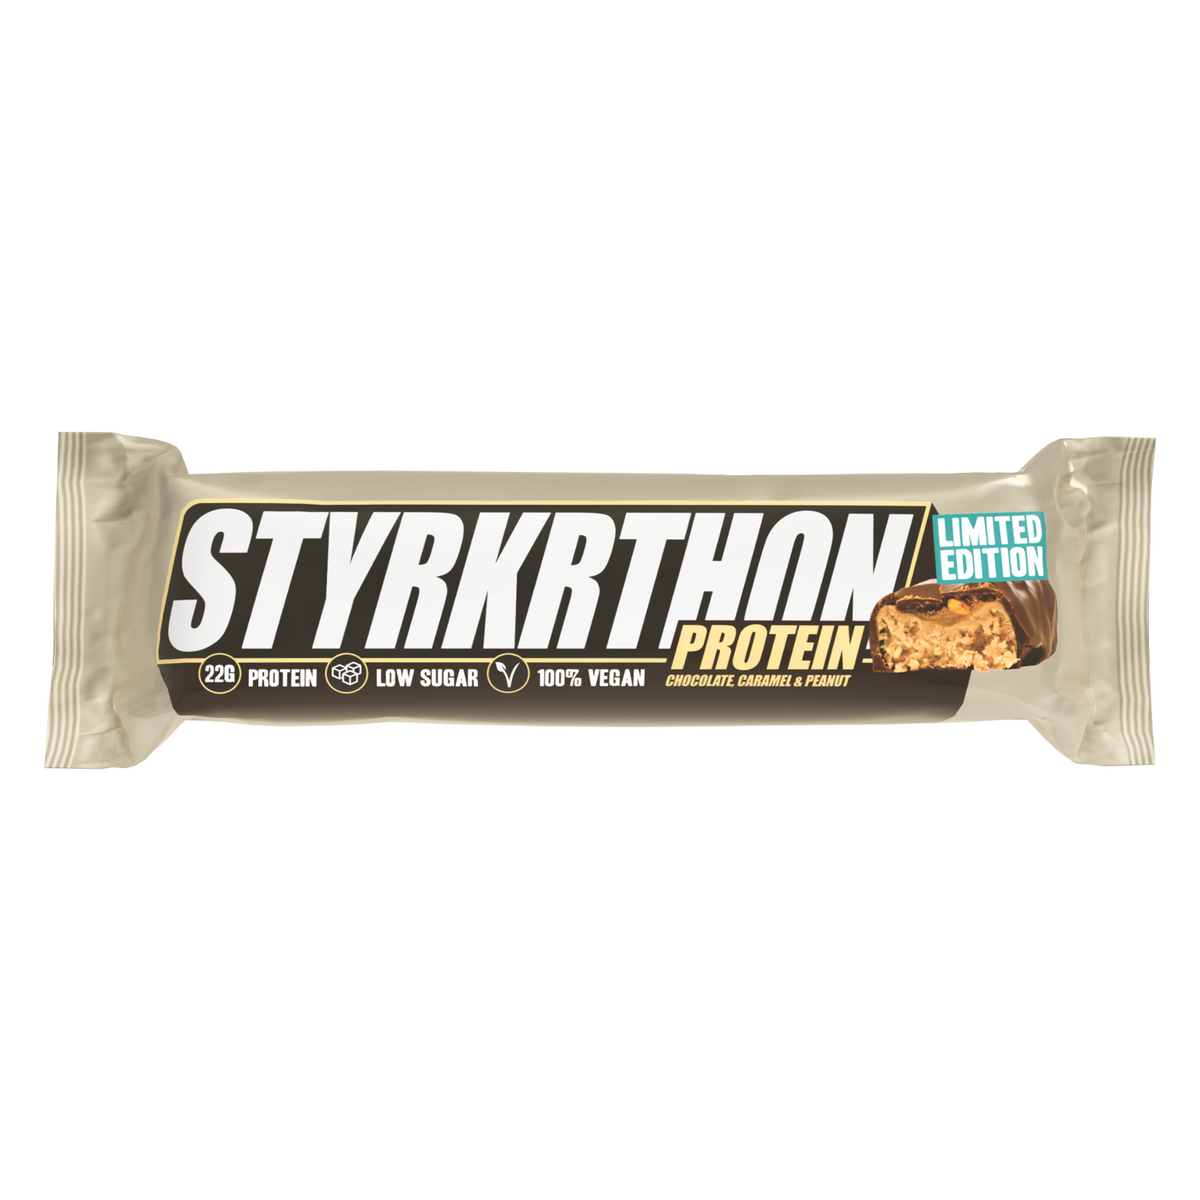 Styrkrthon Choclate, Caramel & Peanut Protein Bar